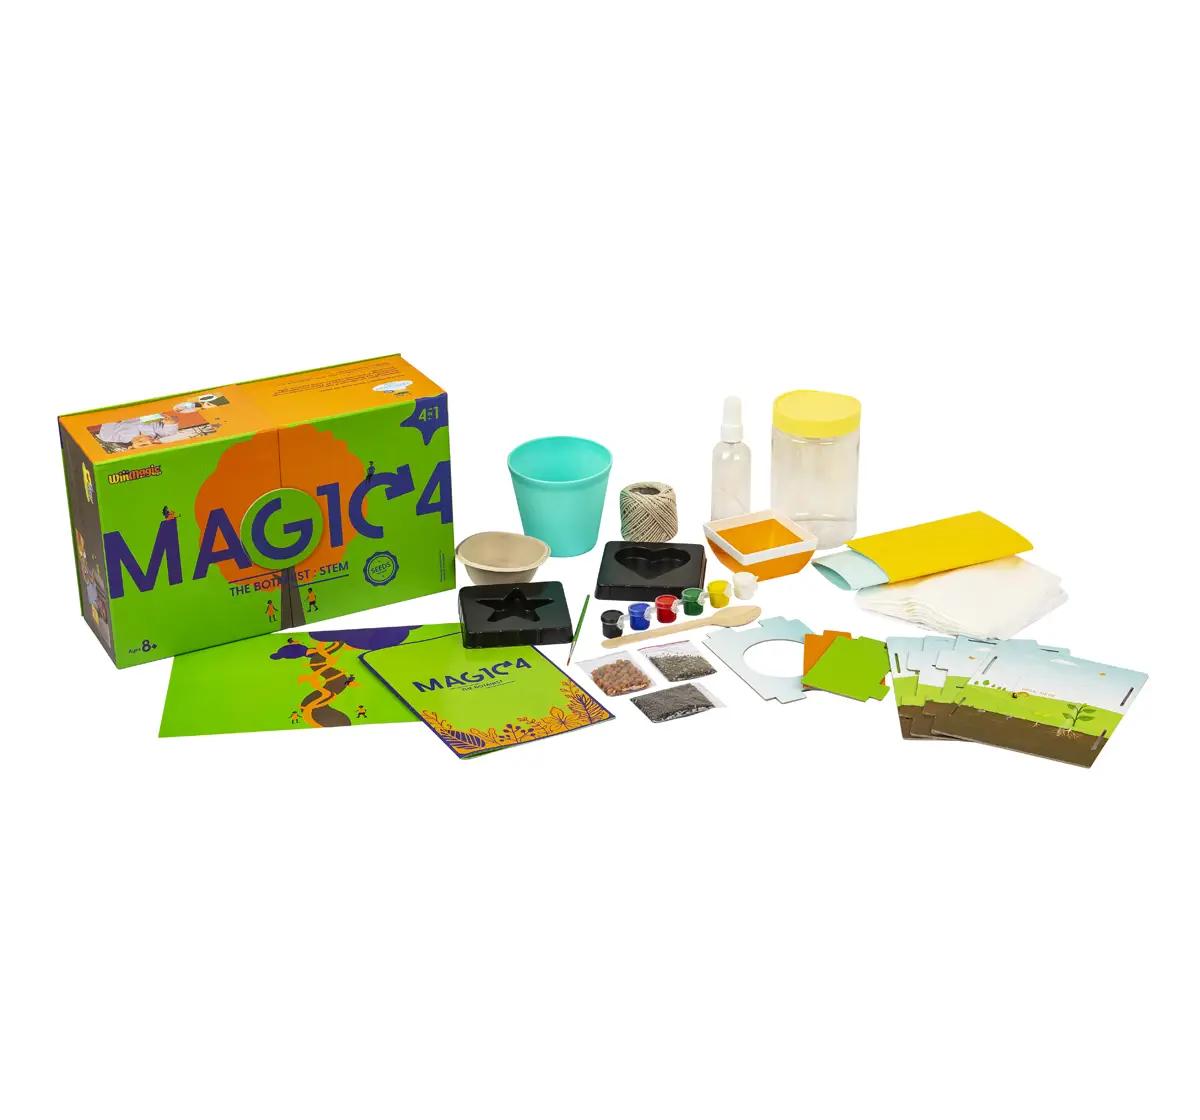 Magic4 STEM The Botanist, STEM kit of 8 Years and Above